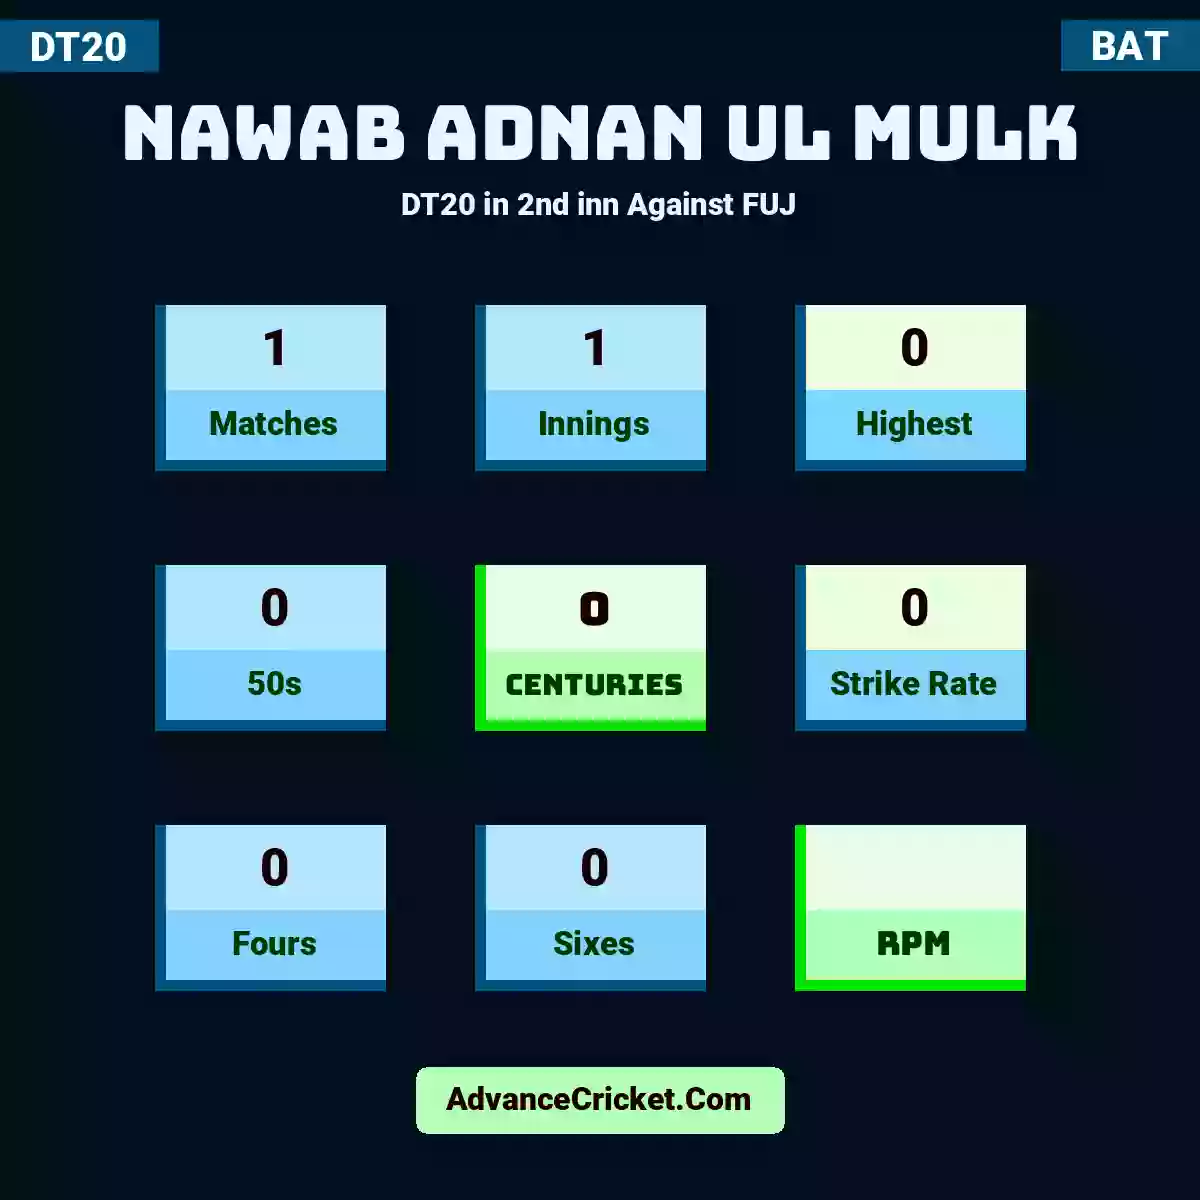 Nawab Adnan ul Mulk DT20  in 2nd inn Against FUJ, Nawab Adnan ul Mulk played 1 matches, scored 0 runs as highest, 0 half-centuries, and 0 centuries, with a strike rate of 0. N.Adnan.ul.Mulk hit 0 fours and 0 sixes.